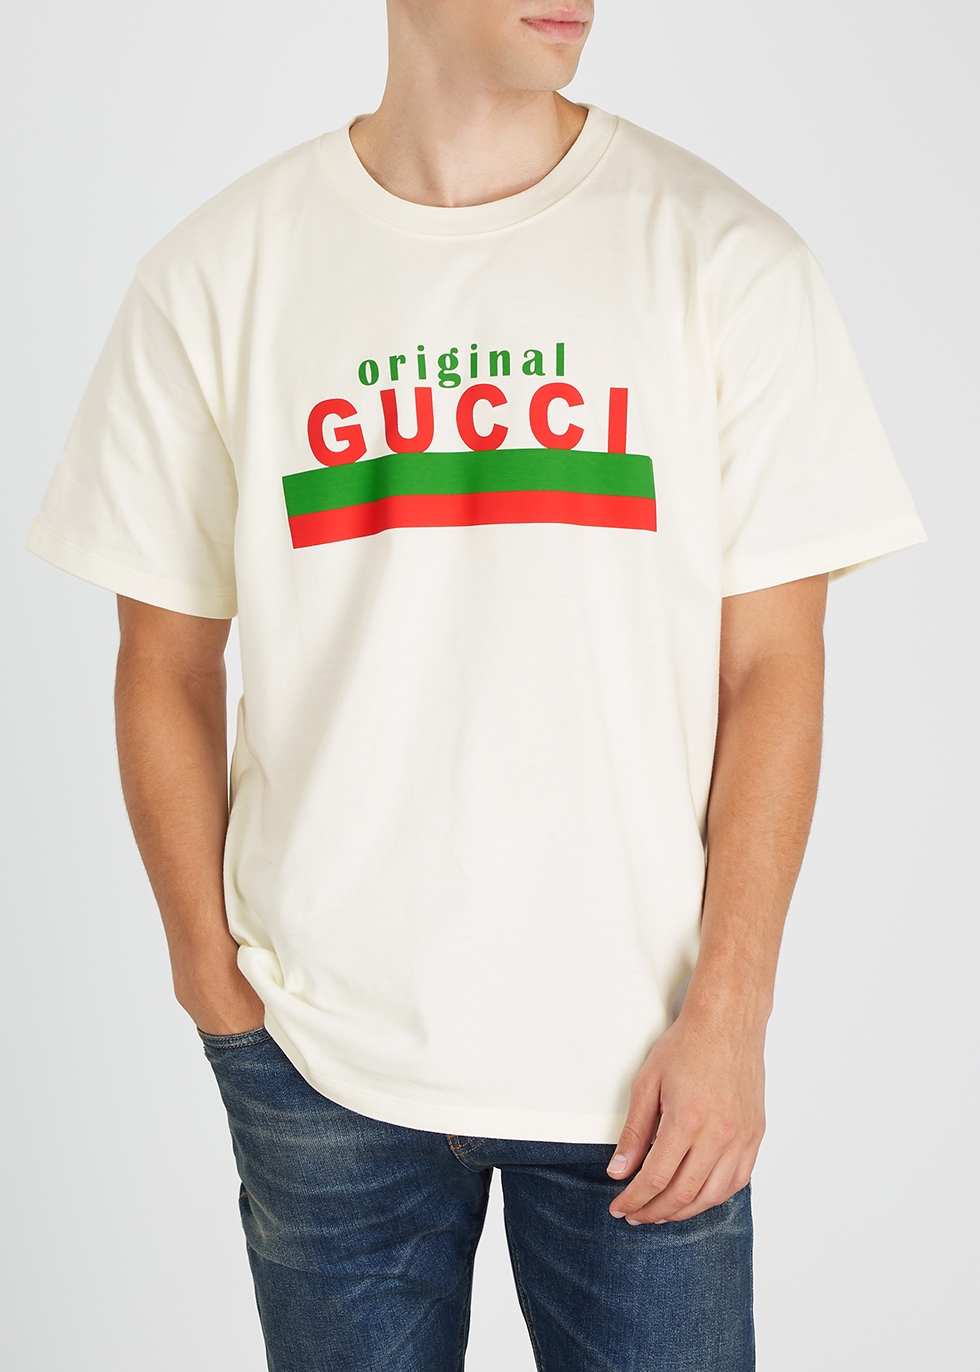 gucci original shirt